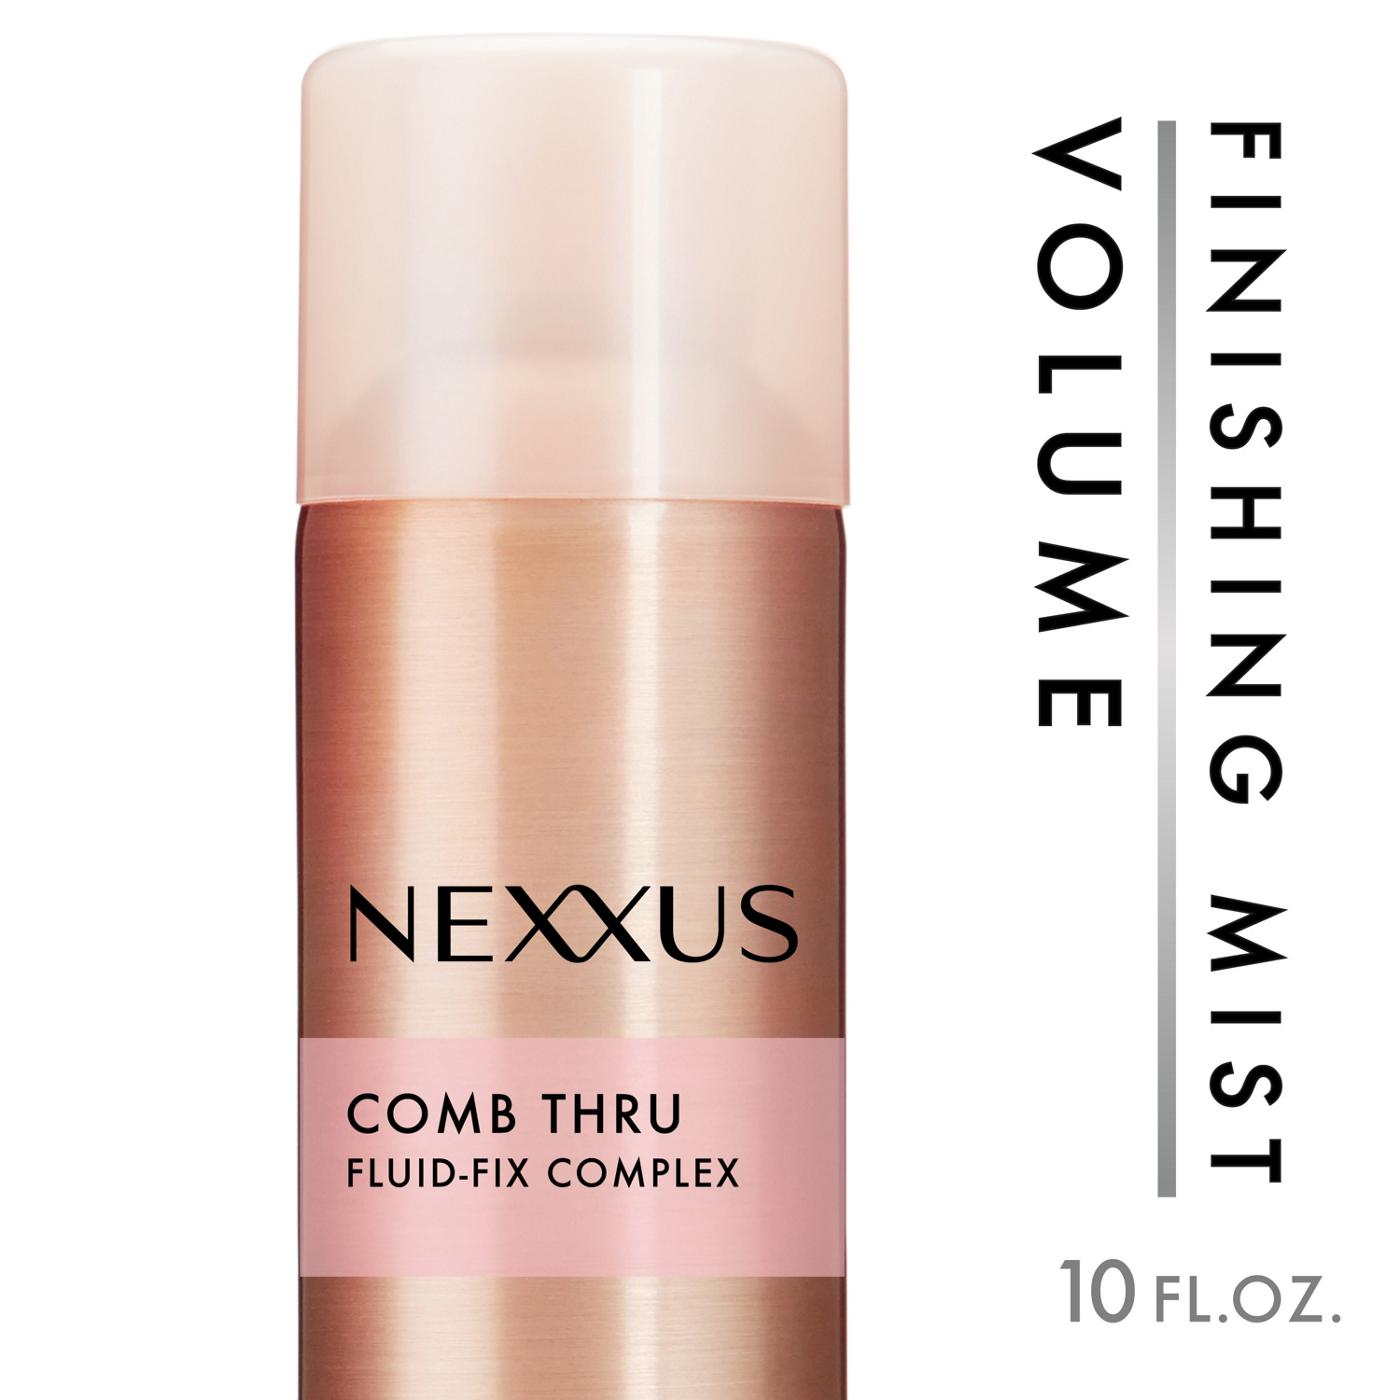 Nexxus Comb Thru Volume Finishing Mist; image 7 of 10